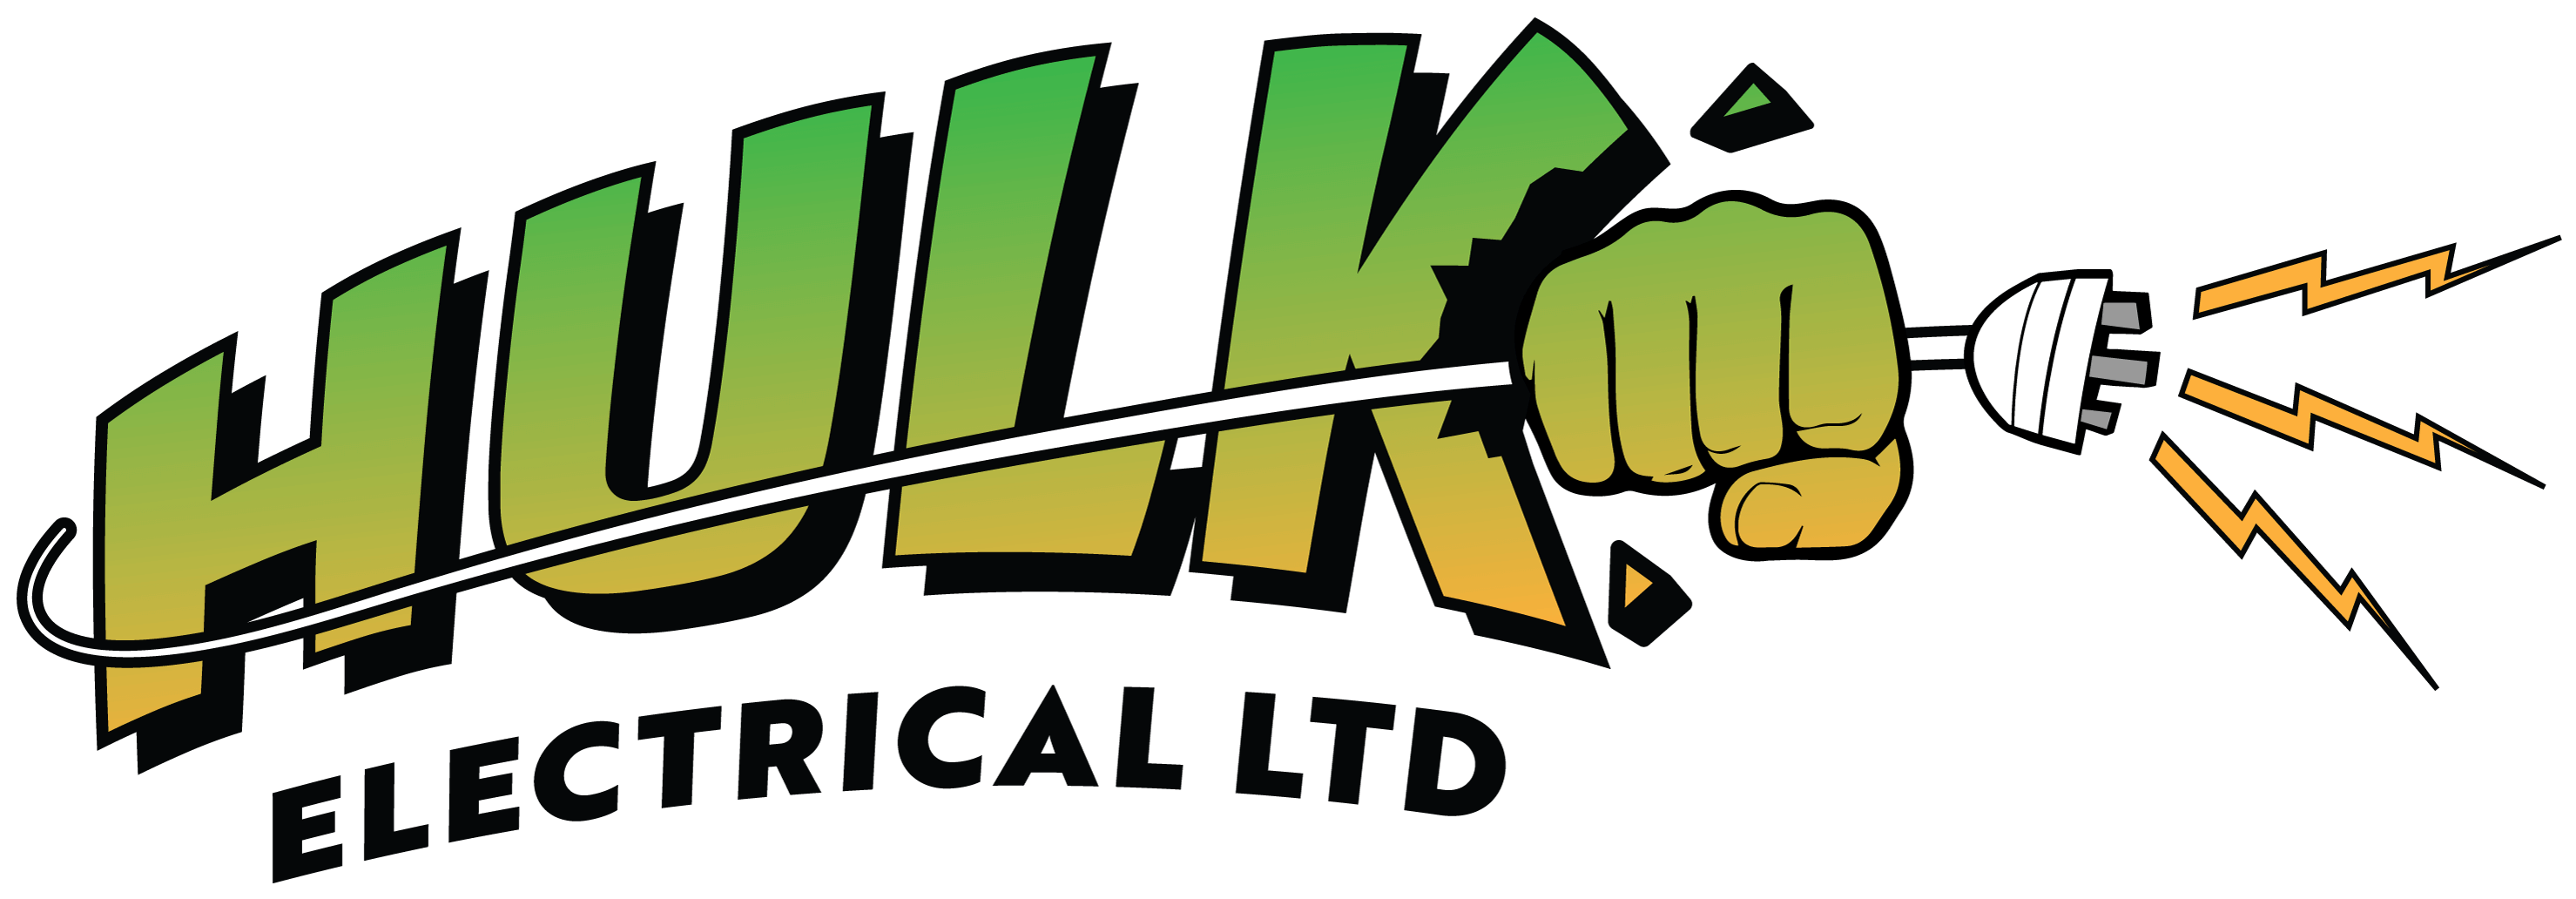 Hulk Electrical